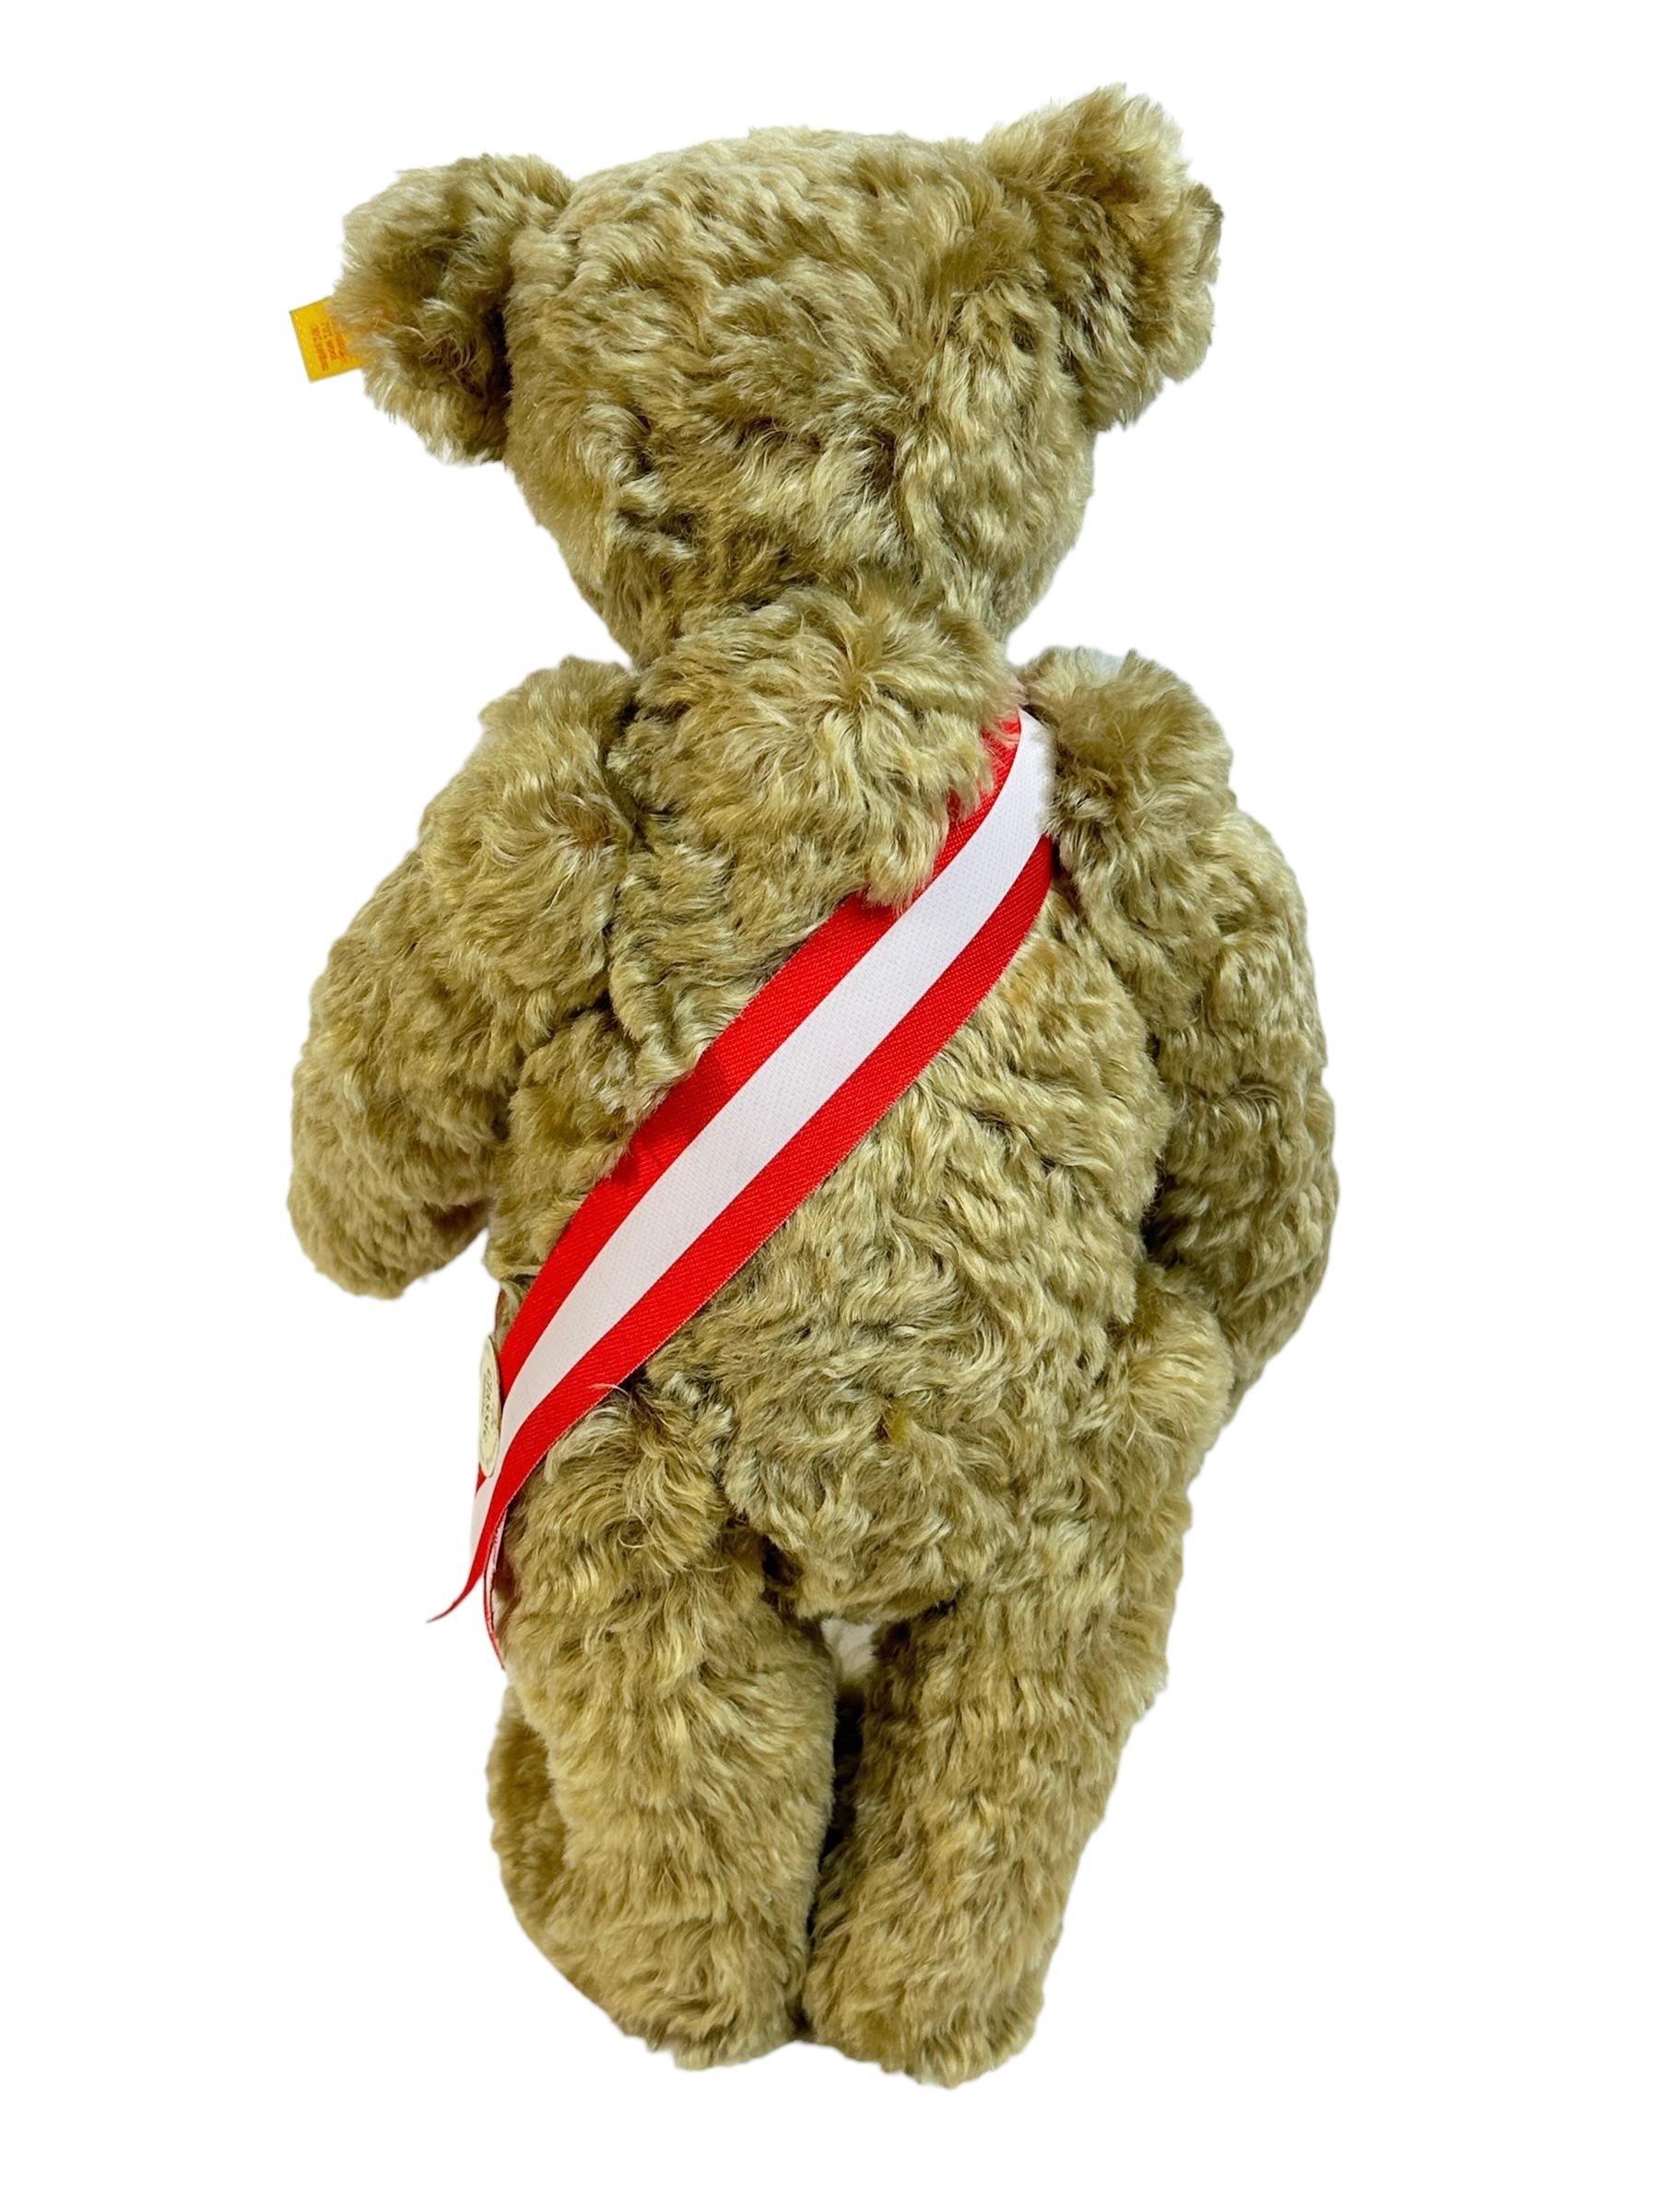 Steiff Collectible Teddy Bear Toy Store Kober Vienna exclusive, Vintage Austria For Sale 4